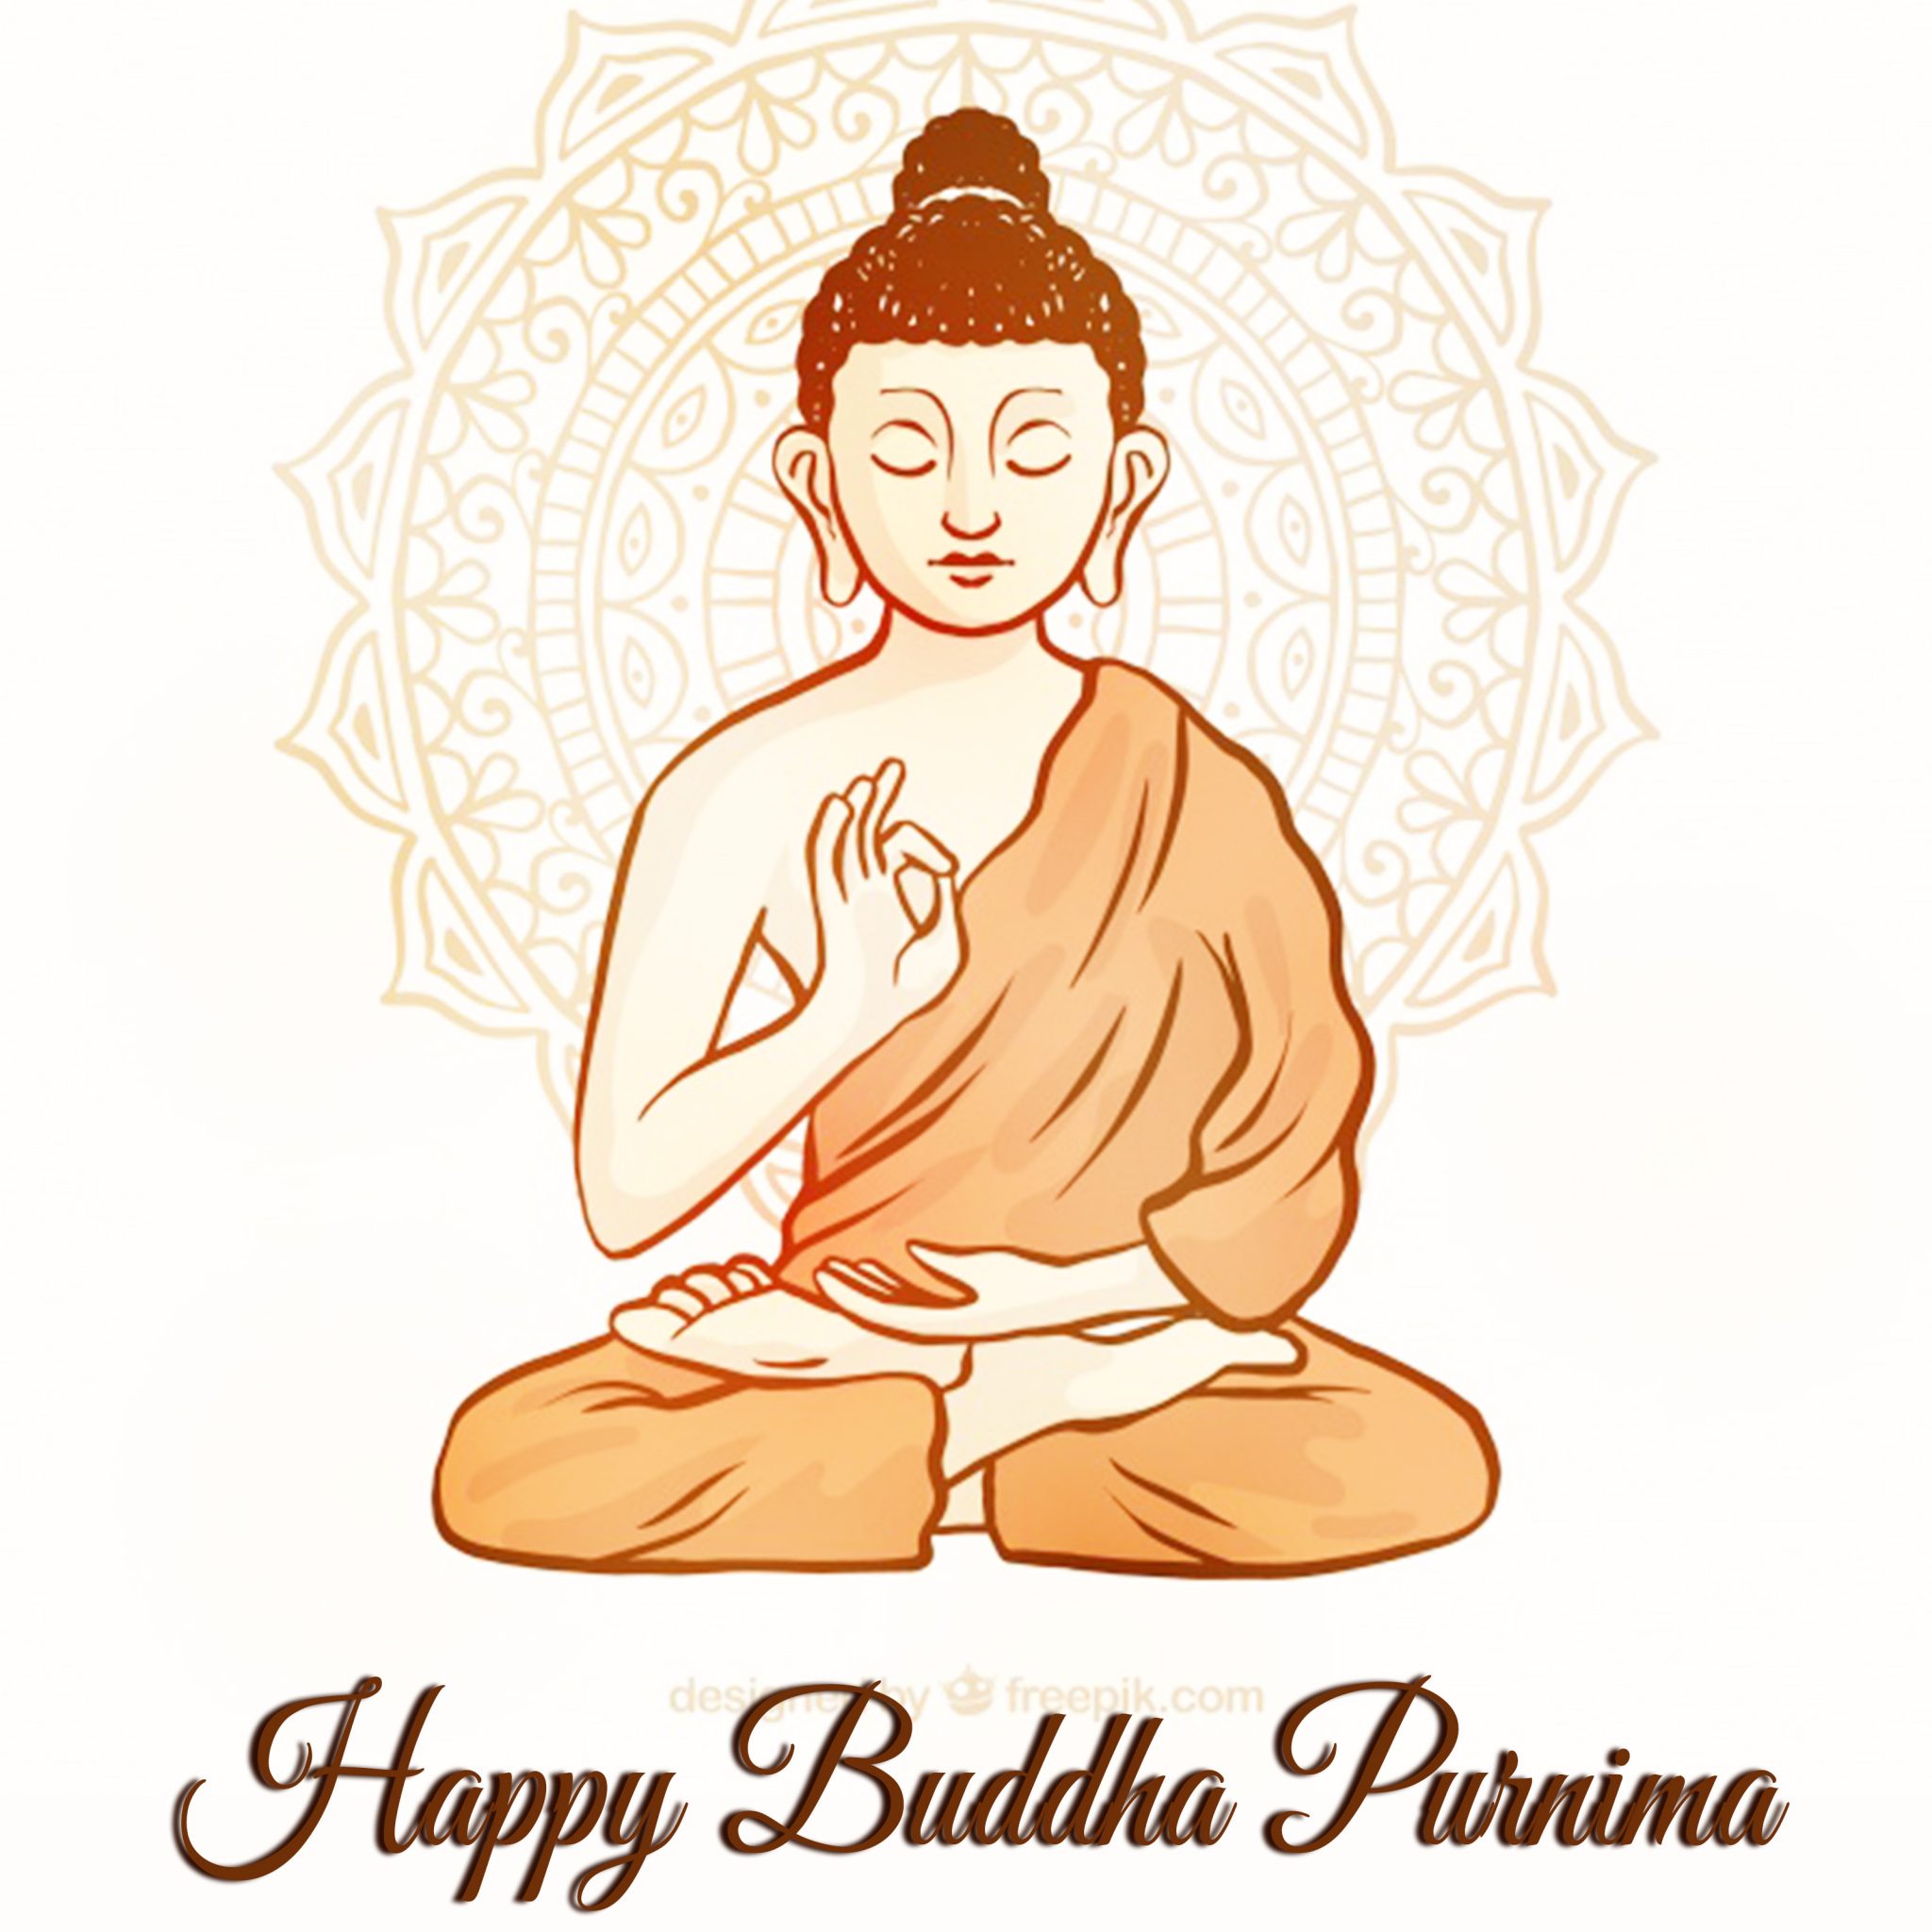 Buddha Jayanti Wishes and Greetings